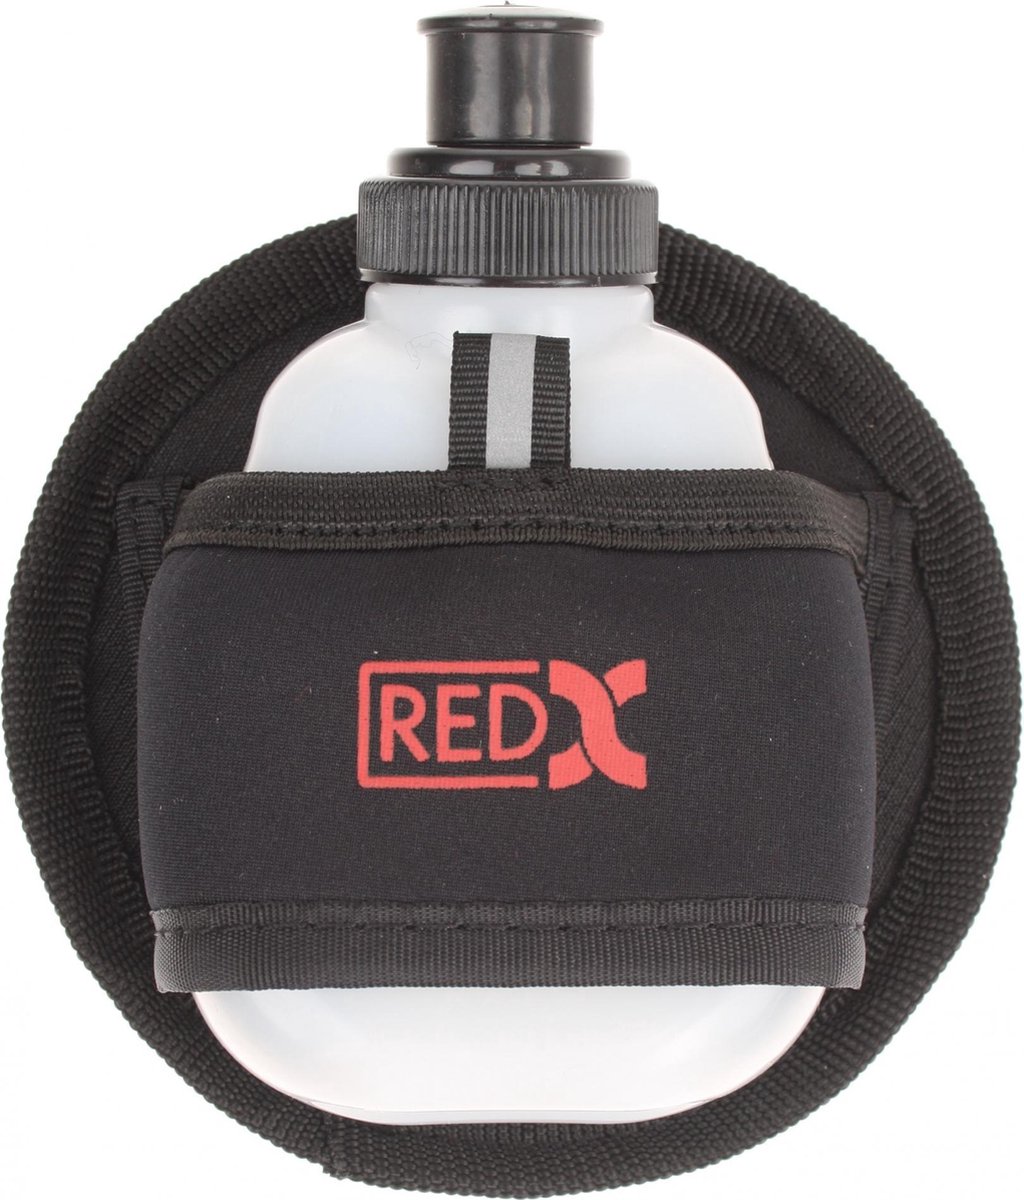 Red-x Bidonpocket Met Bidon 0,6 L